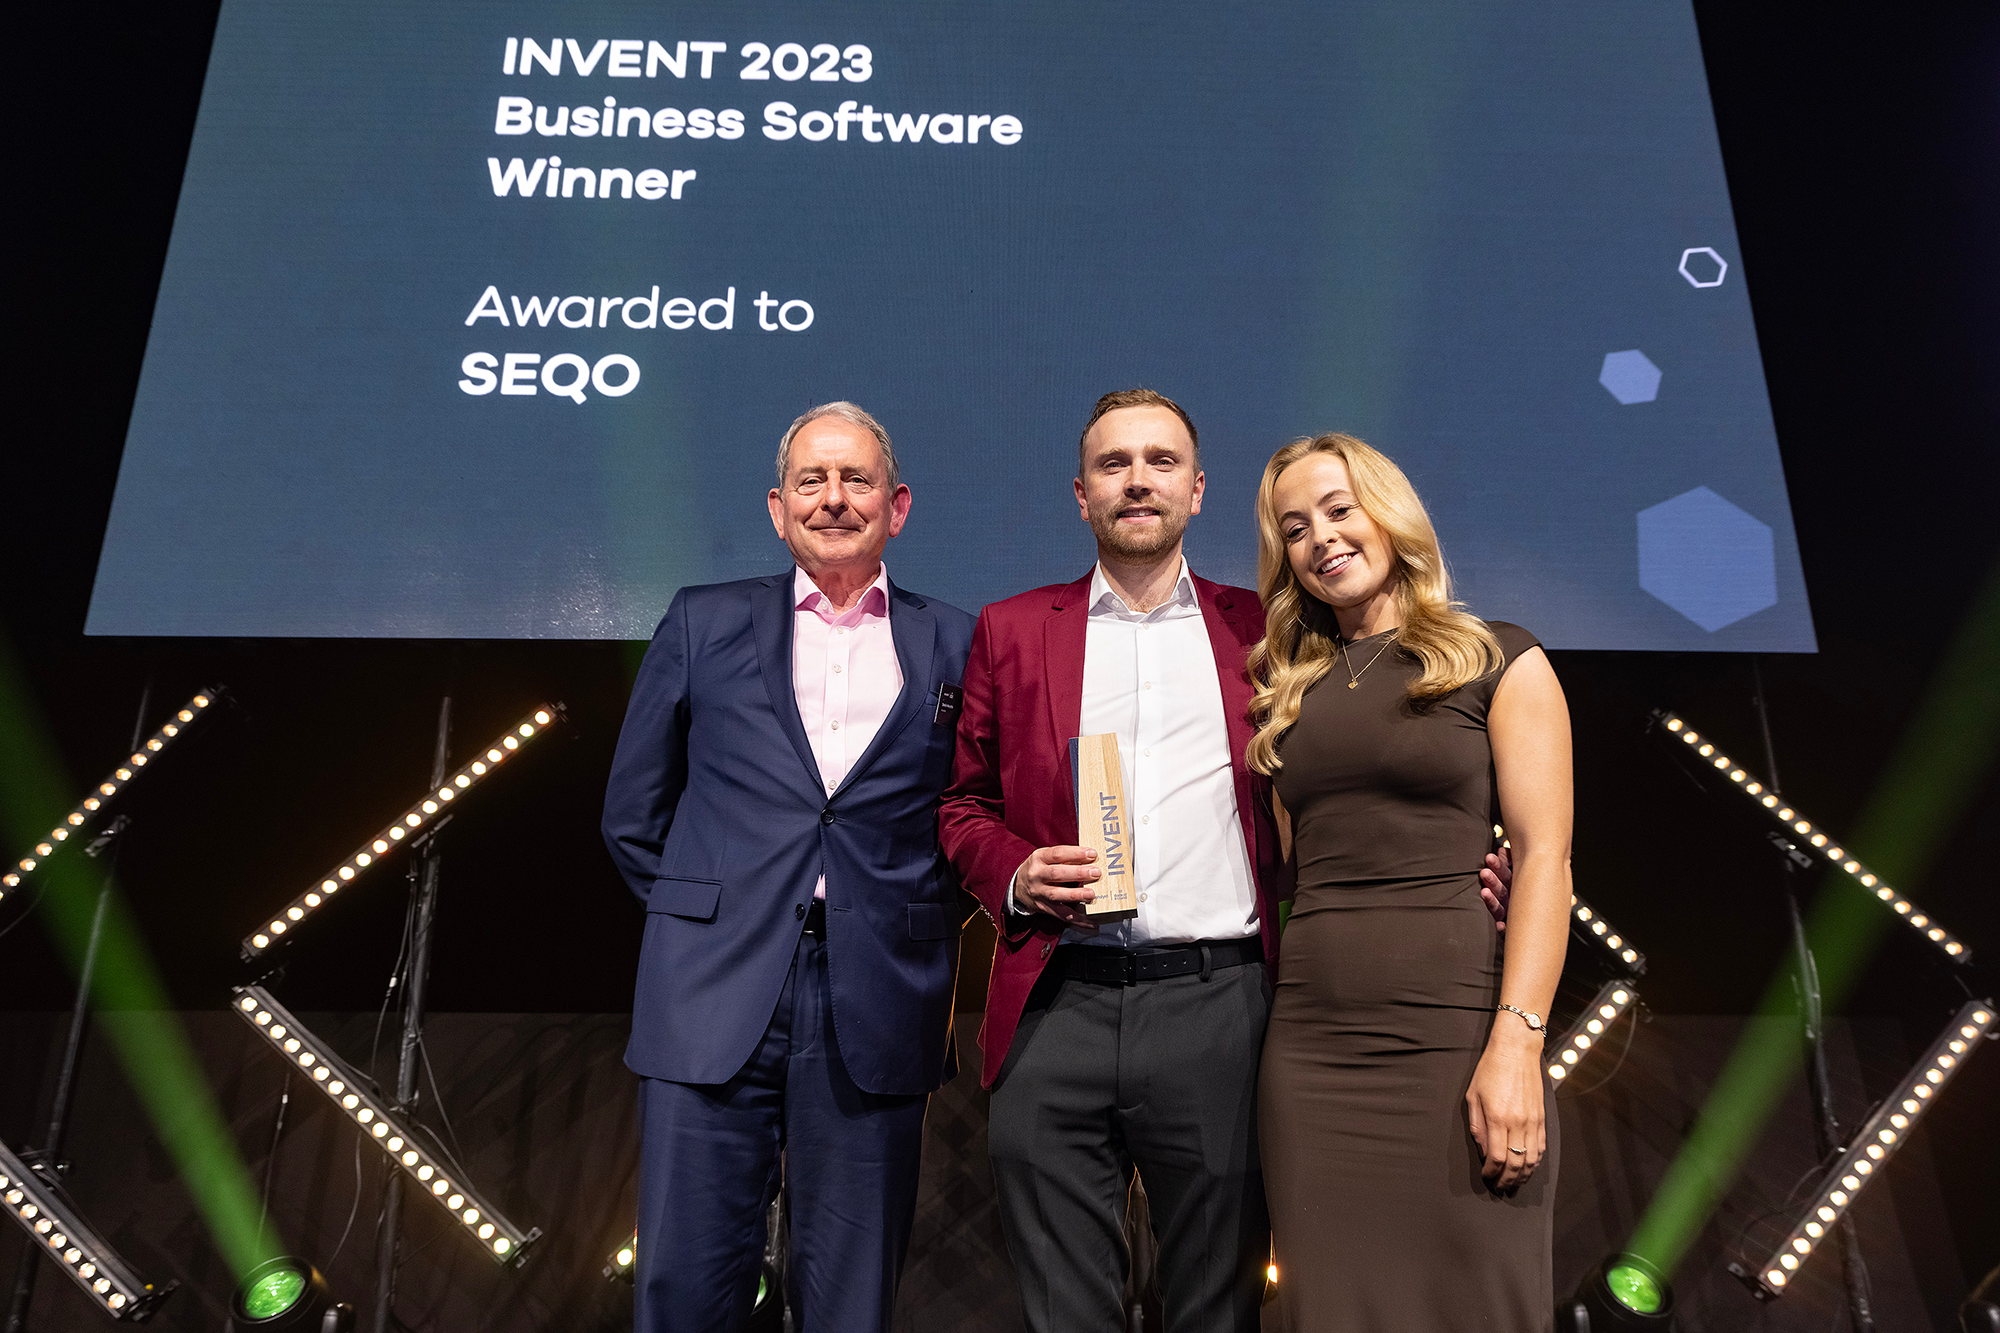 INVENT Awards Business Software Winner SEQO